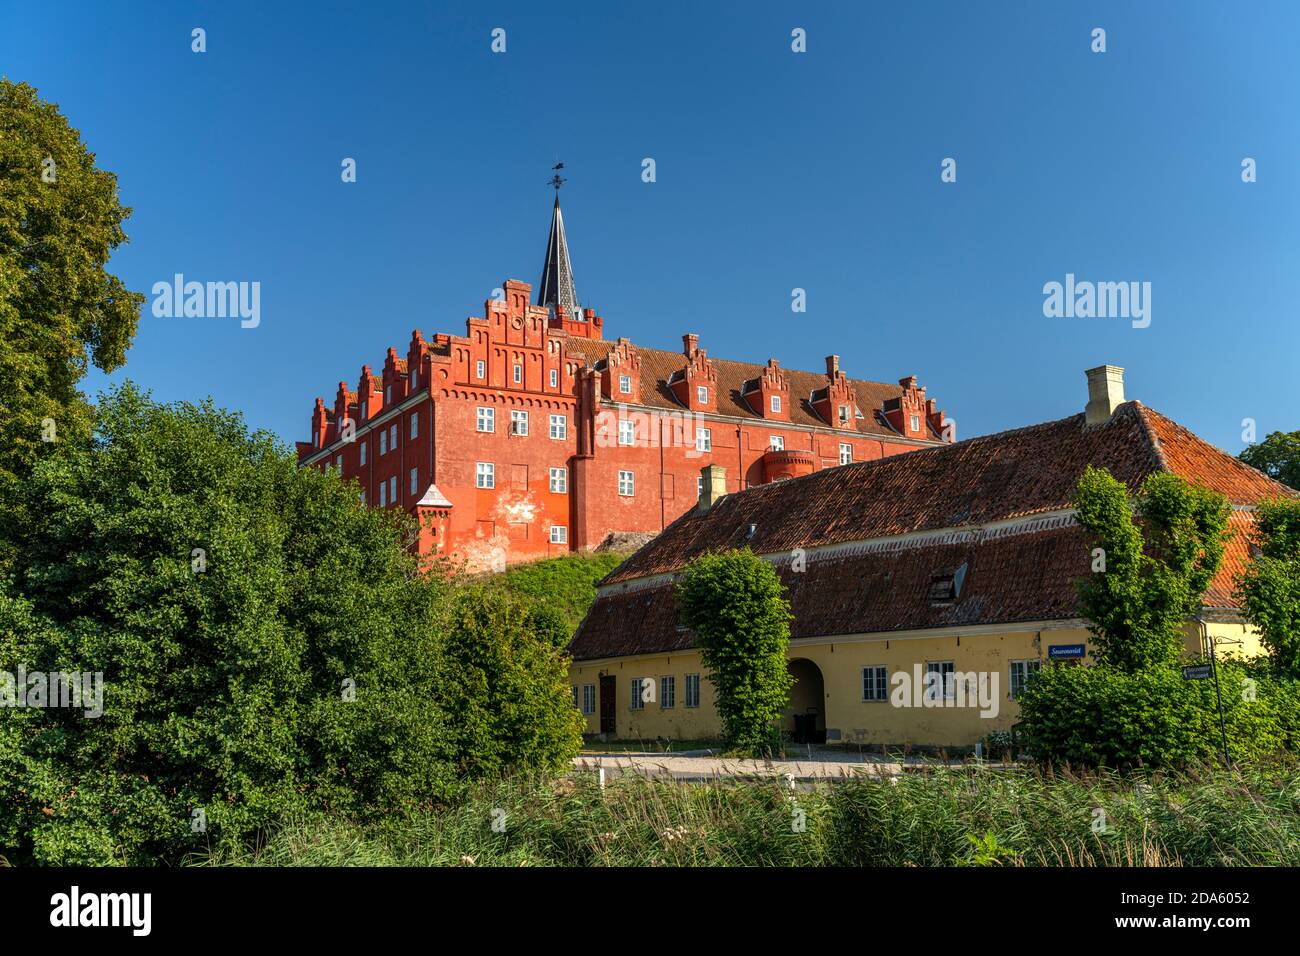 Castello di Dänemark, Langeland,  , Europa | Castello di Tranekaer, Isola di Langeland, Danimarca, Europa Foto Stock